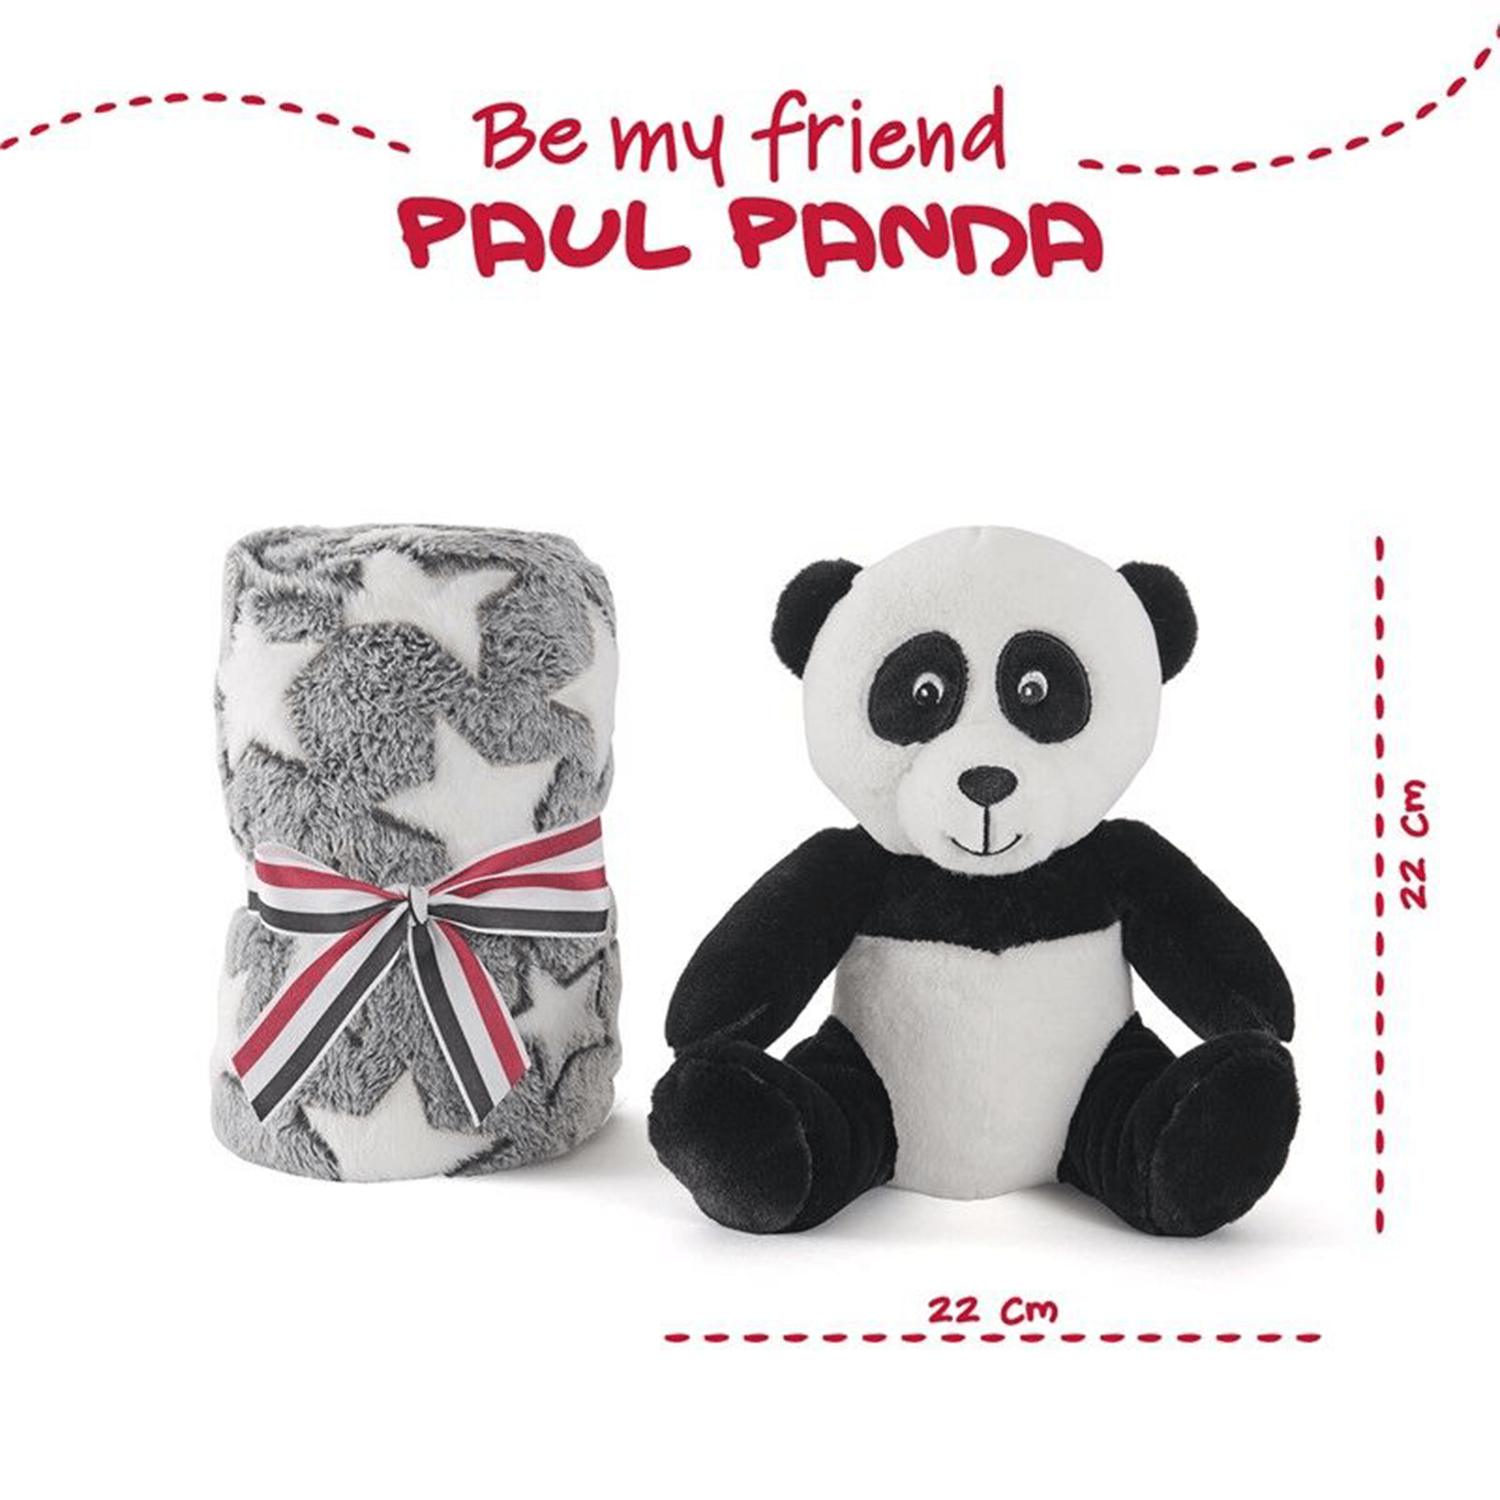 paul-the-panda-soft-blanket-and-plush